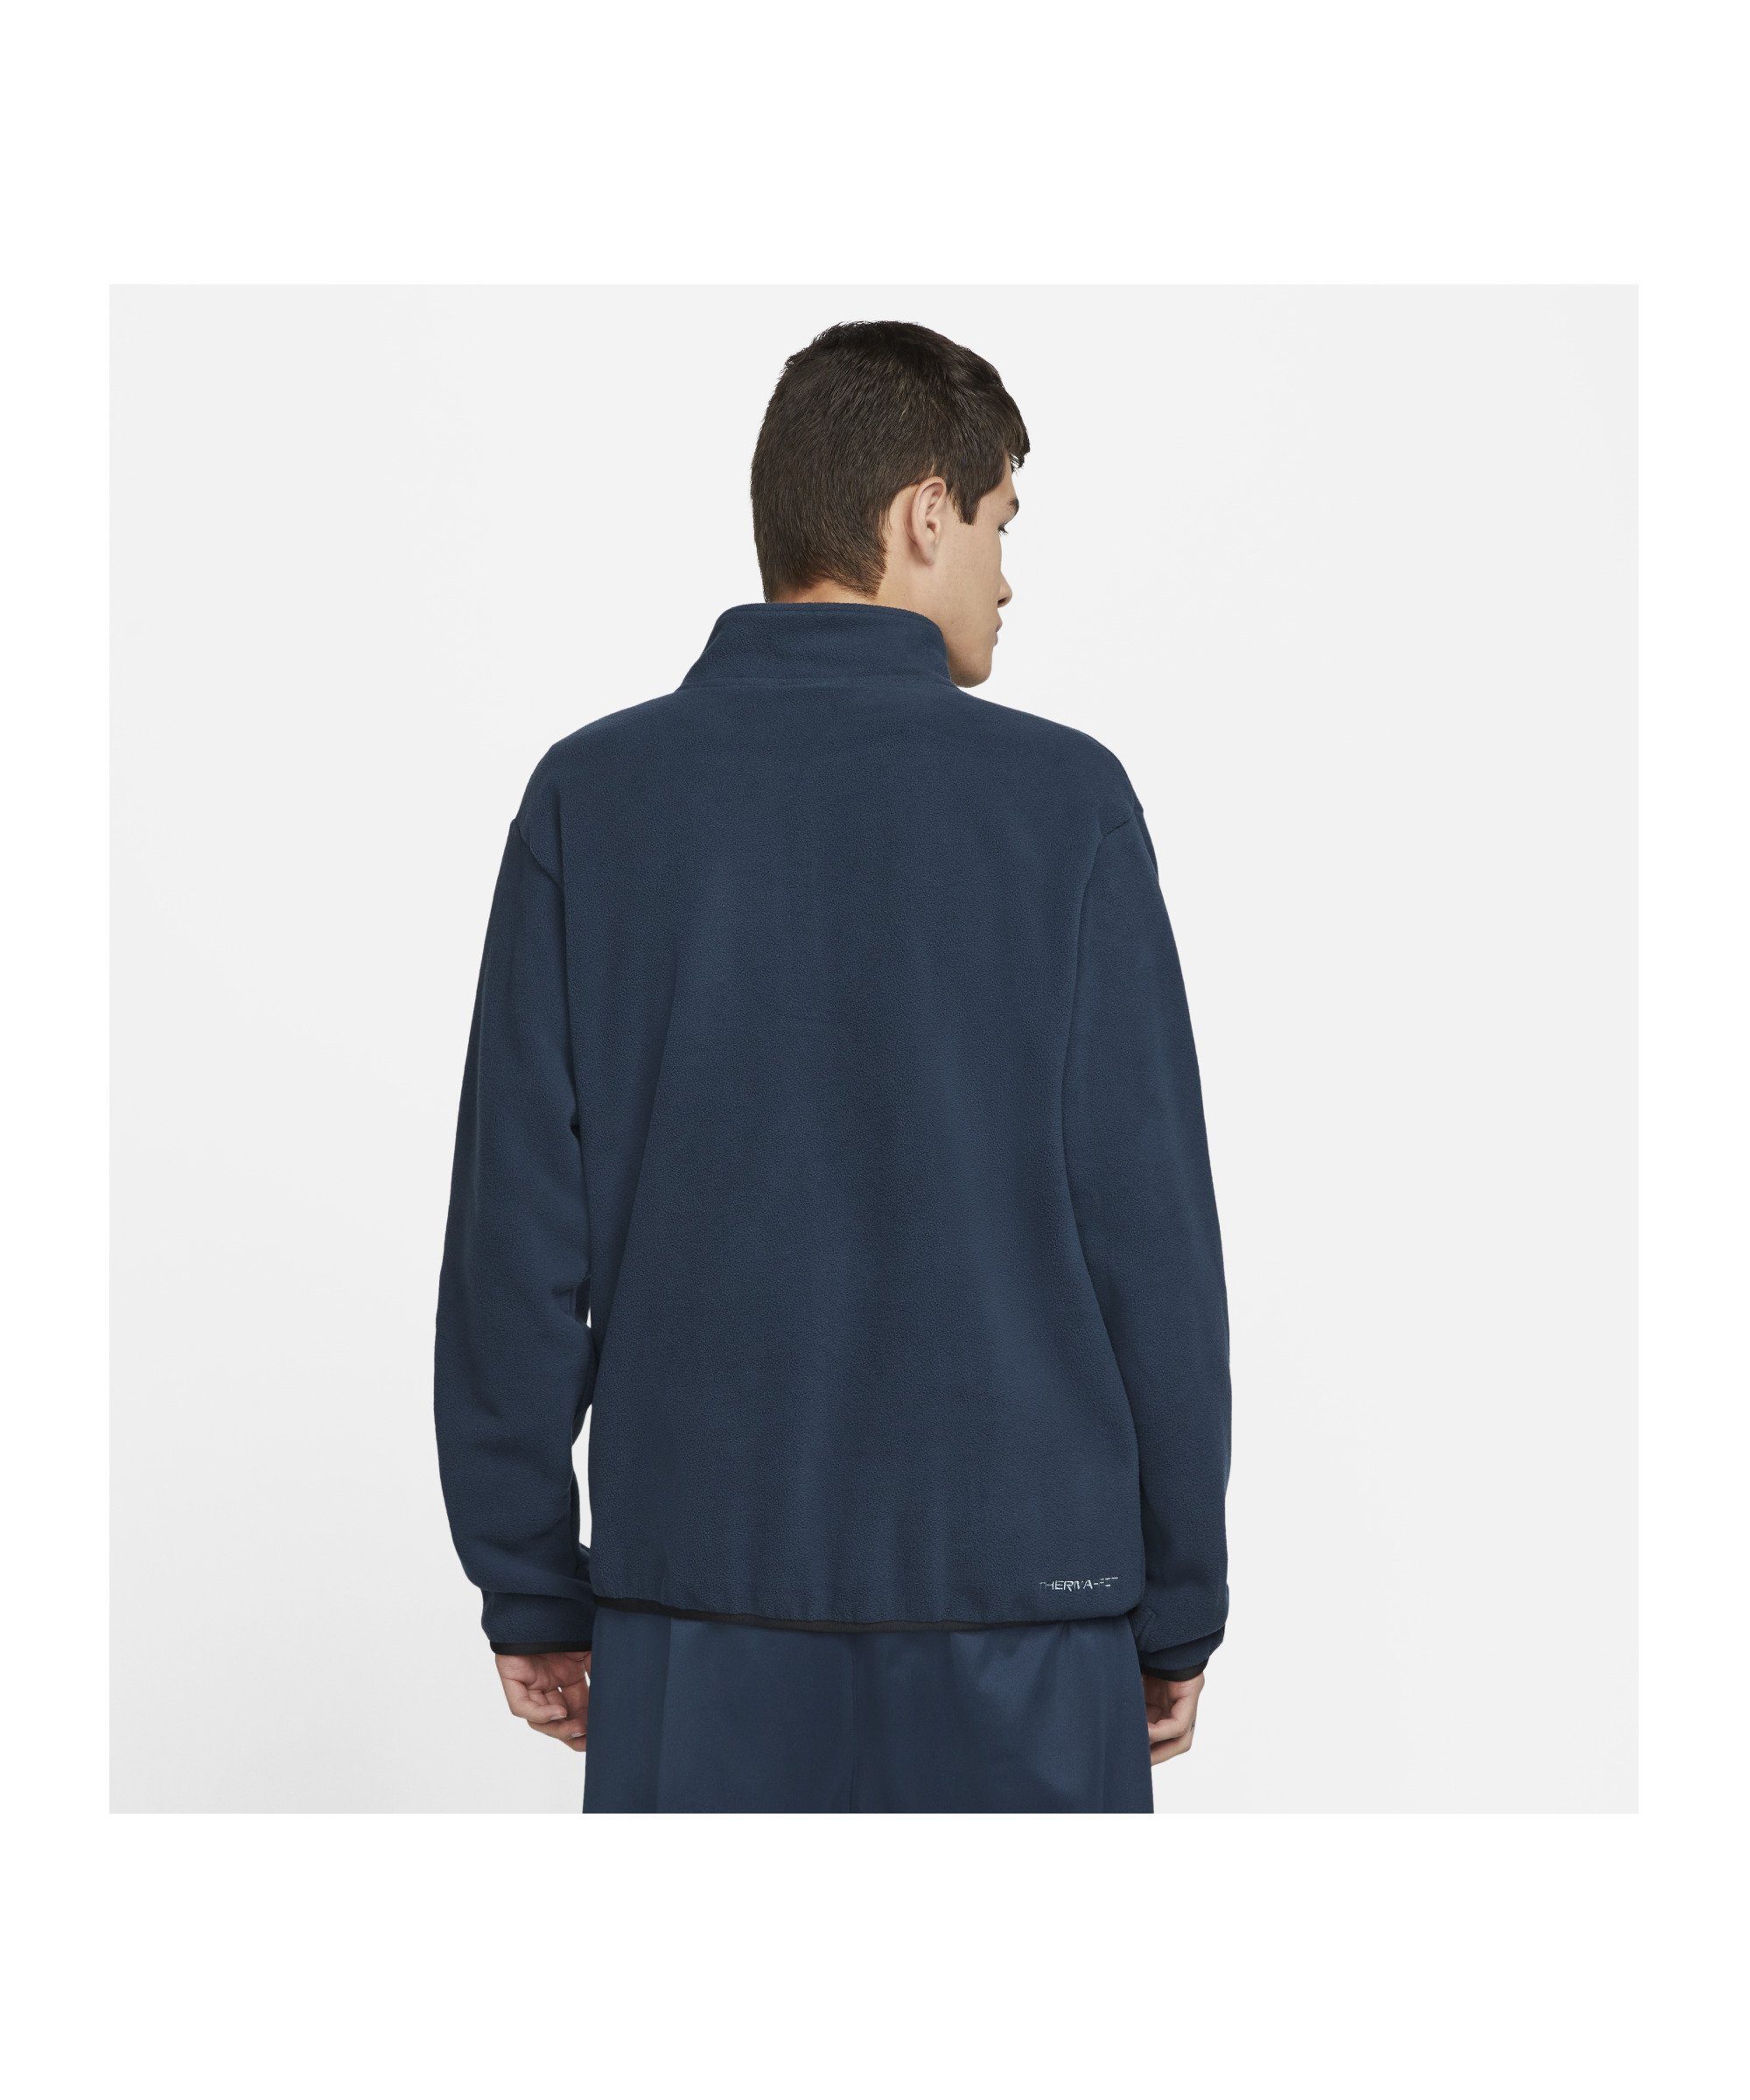 Fleece Nike Polar HalfZip Sportswear blauschwarz Sweatshirt Sweatshirt